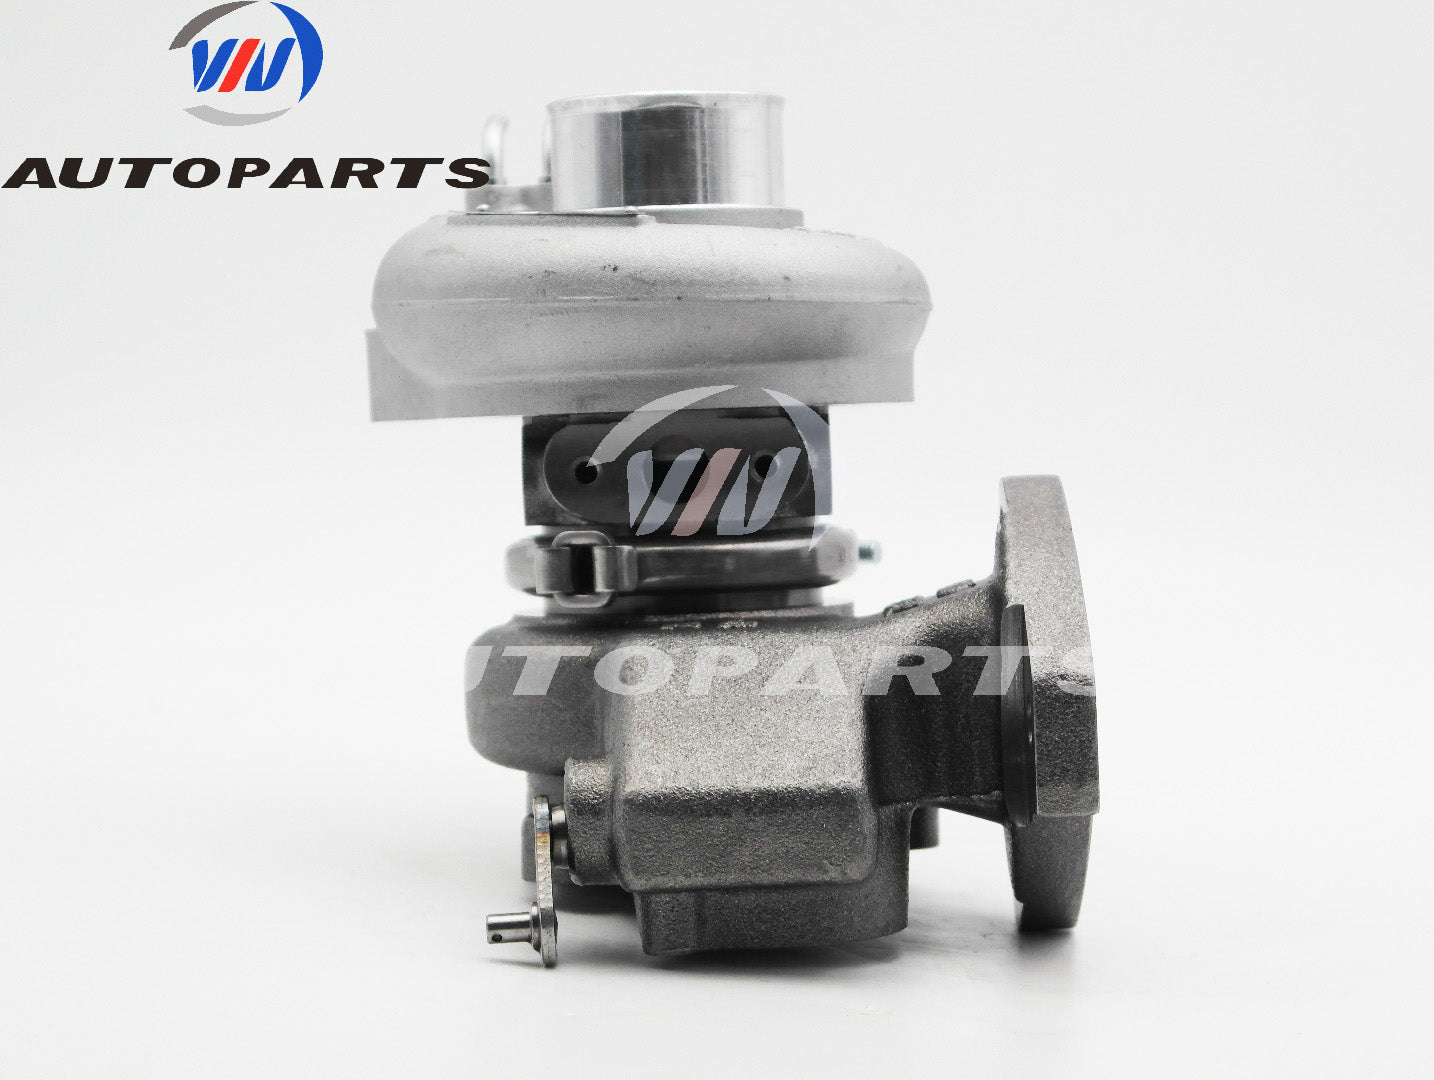 VIV AUTOPARTS Billet in Turbocharger 49177-01502 for Mitsubishi L200, Pajero II 2.5L Diesel Engine